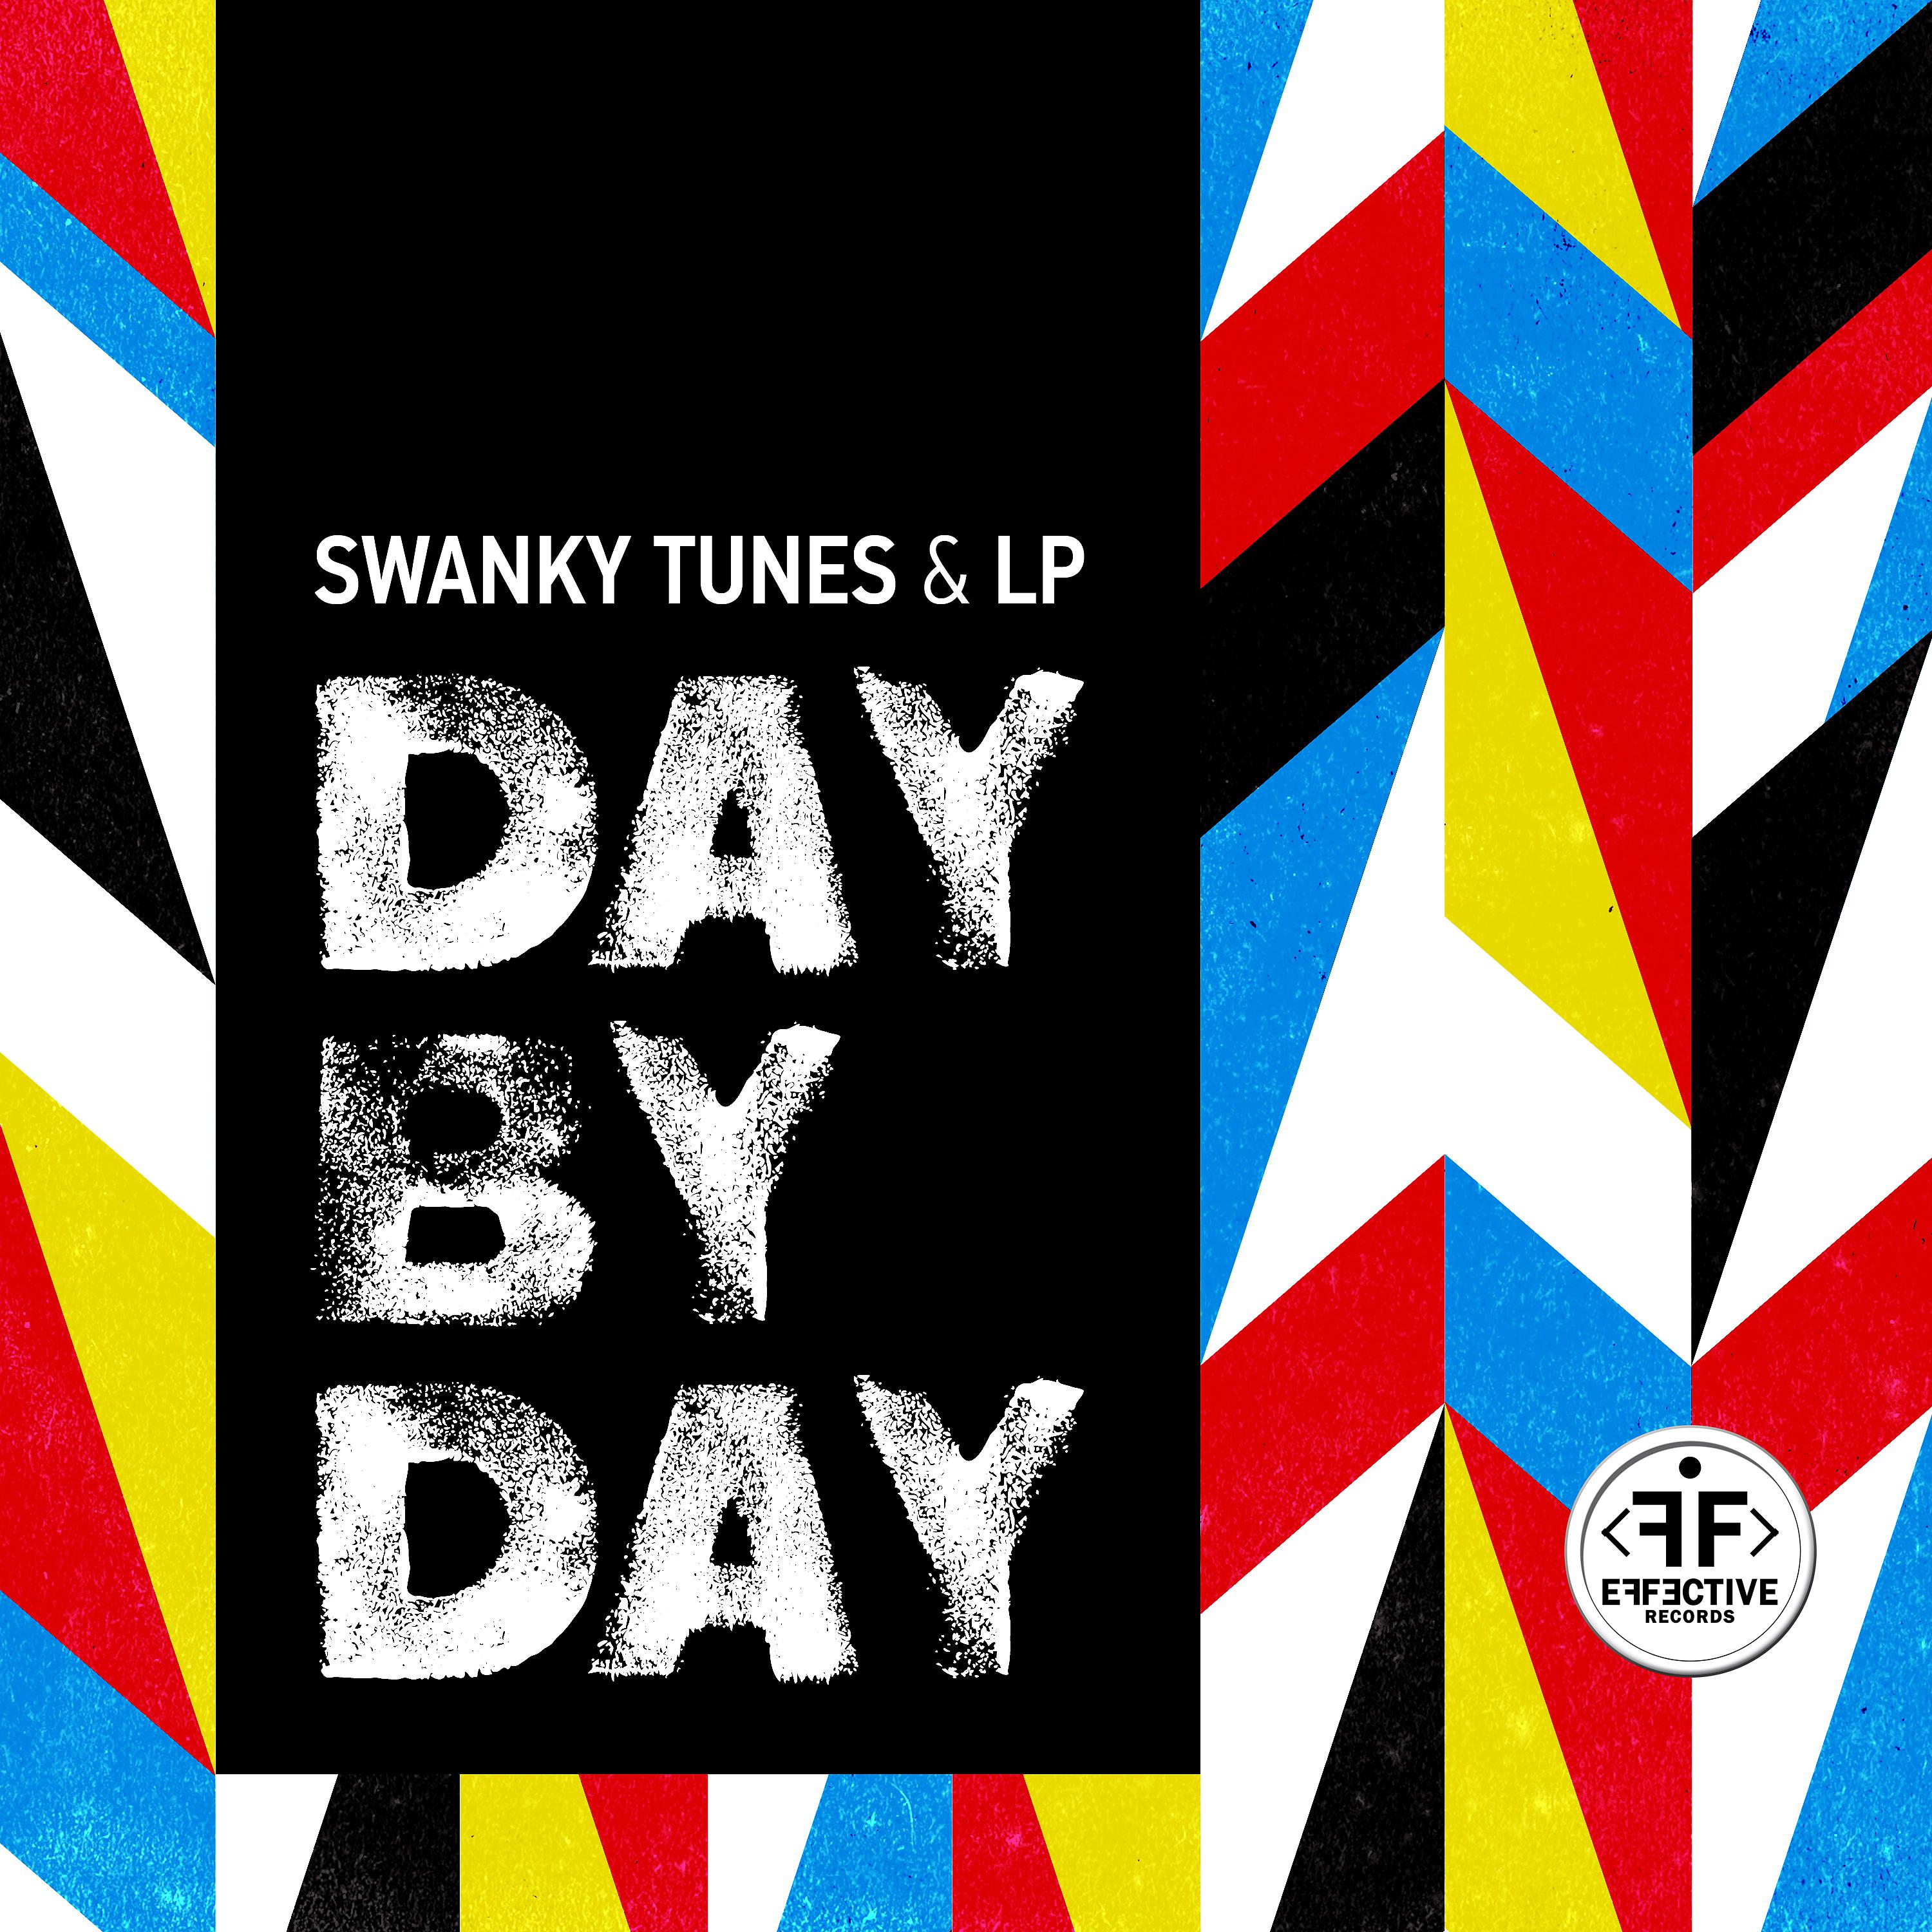 Swanky tunes песни. Swanky Tunes LP. Swanky Tunes & LP - Day by Day. Day by Day обложка. Сванки Тюнс дей бай дей.